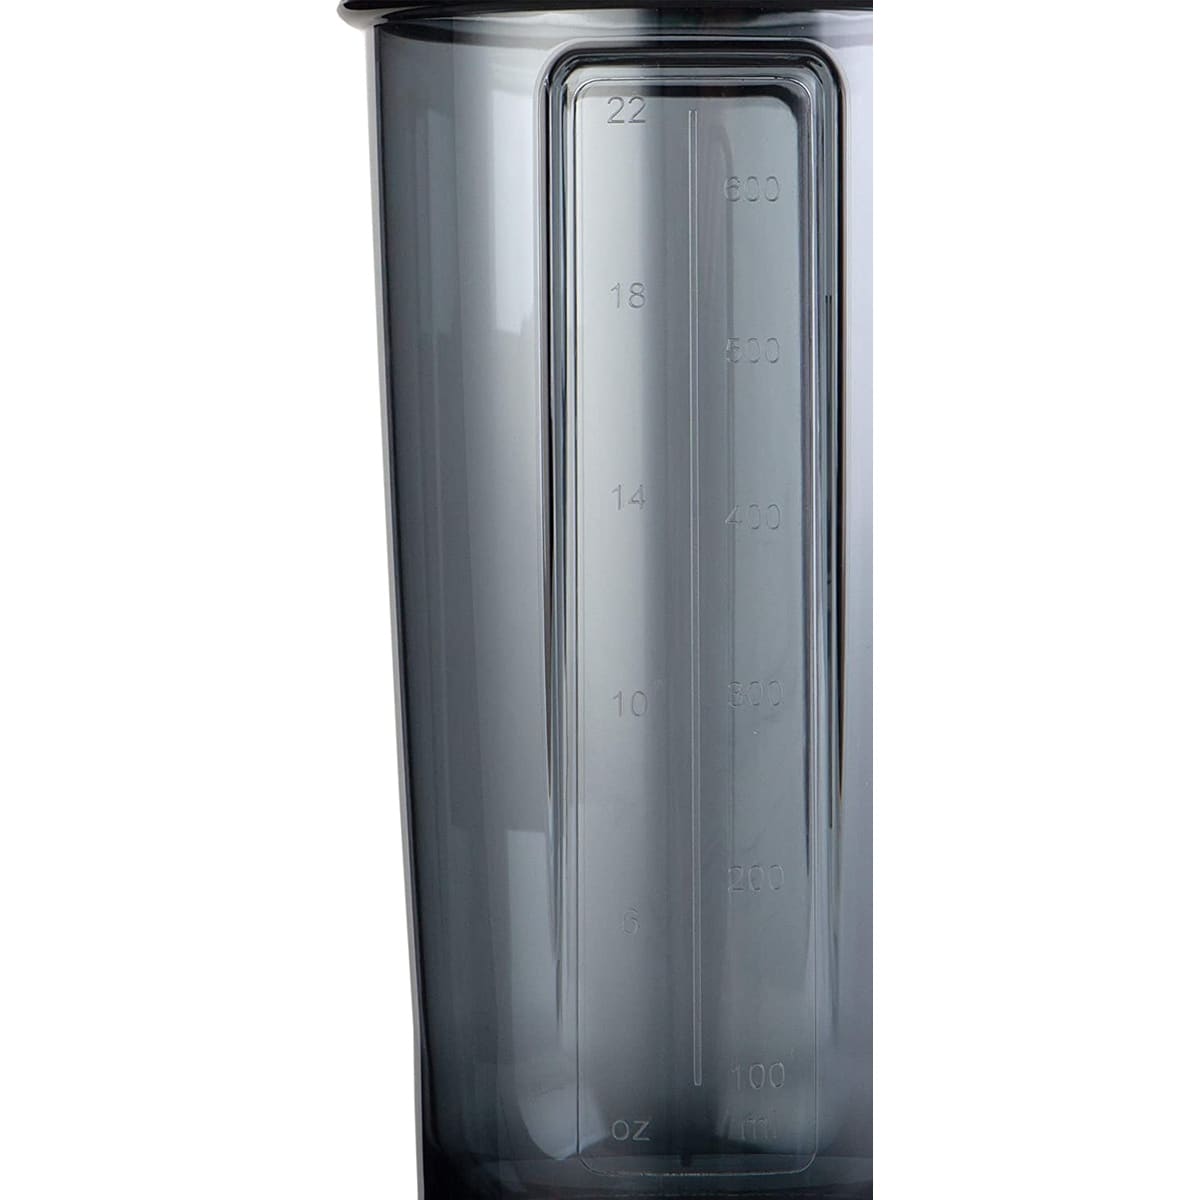 Blender Bottle The Mandalorian Pro Series 28 oz. Shaker Cup - Do You Even Lift?